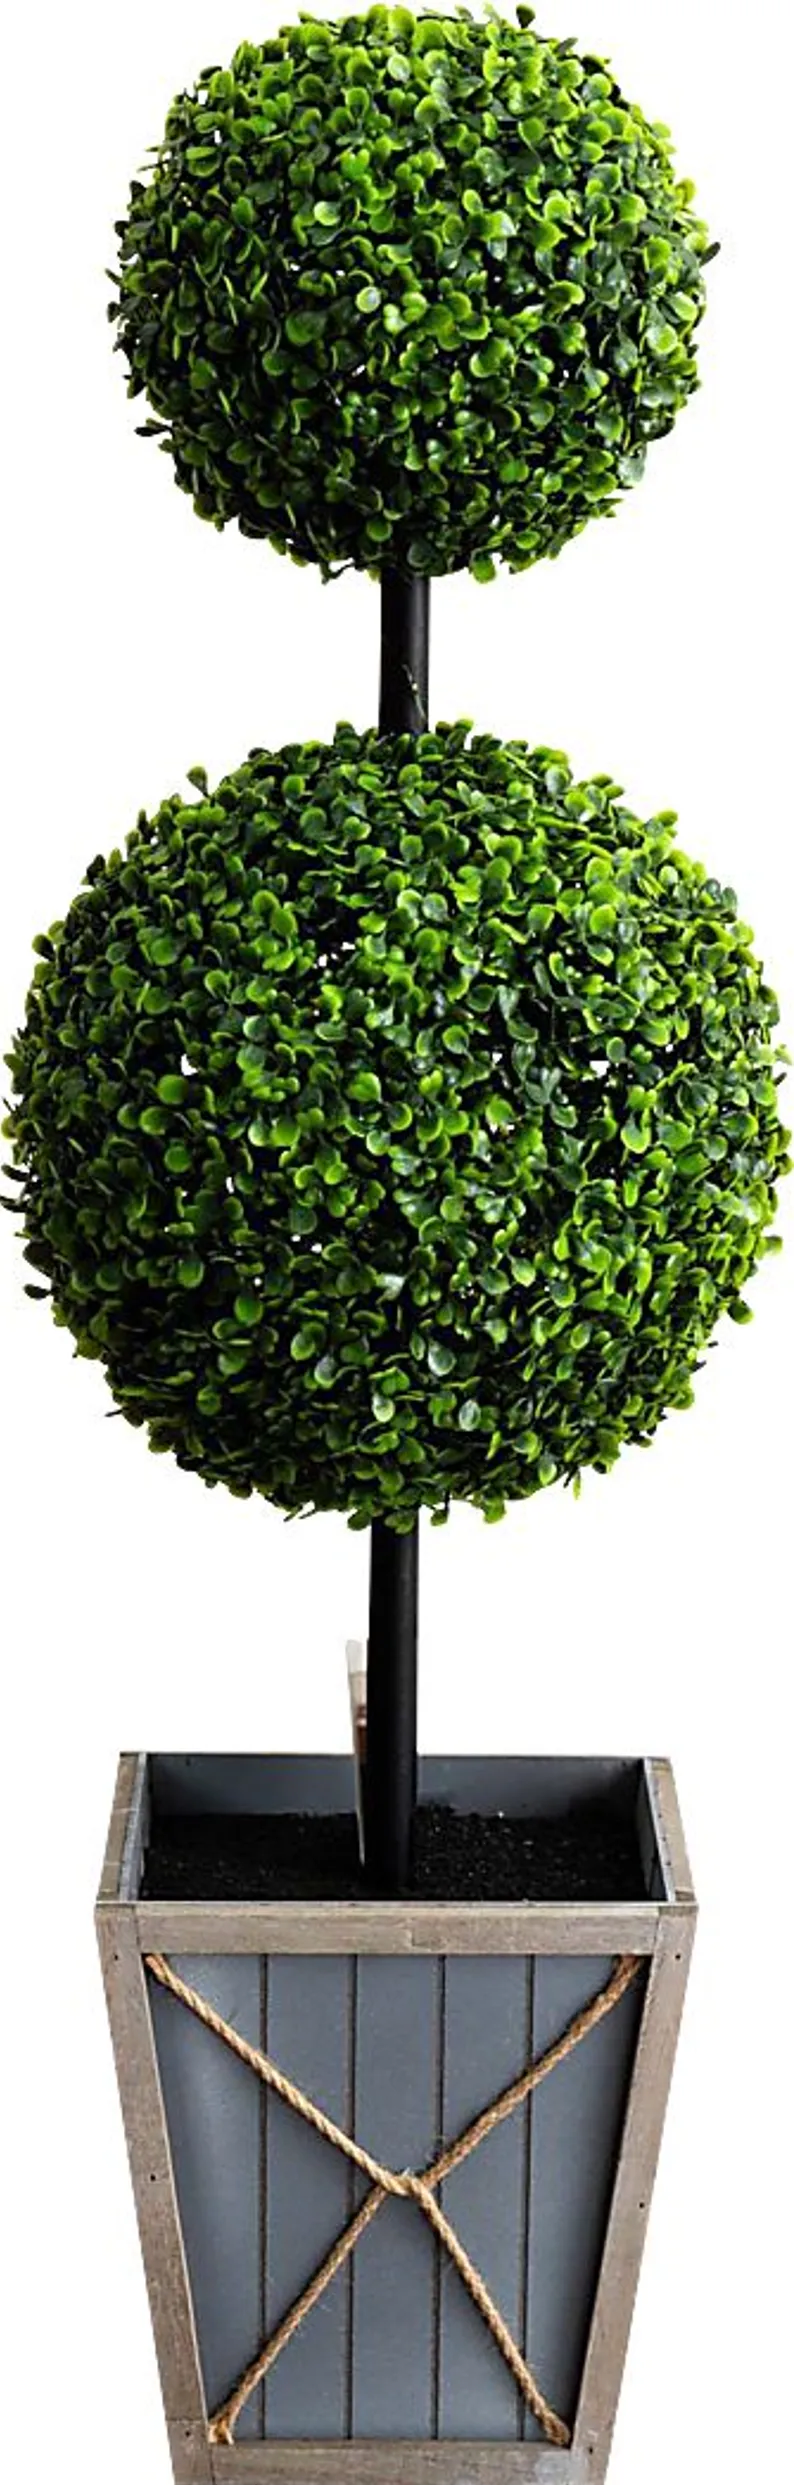 Appleberry II Green Artificial Double Ball Boxwood Topiary